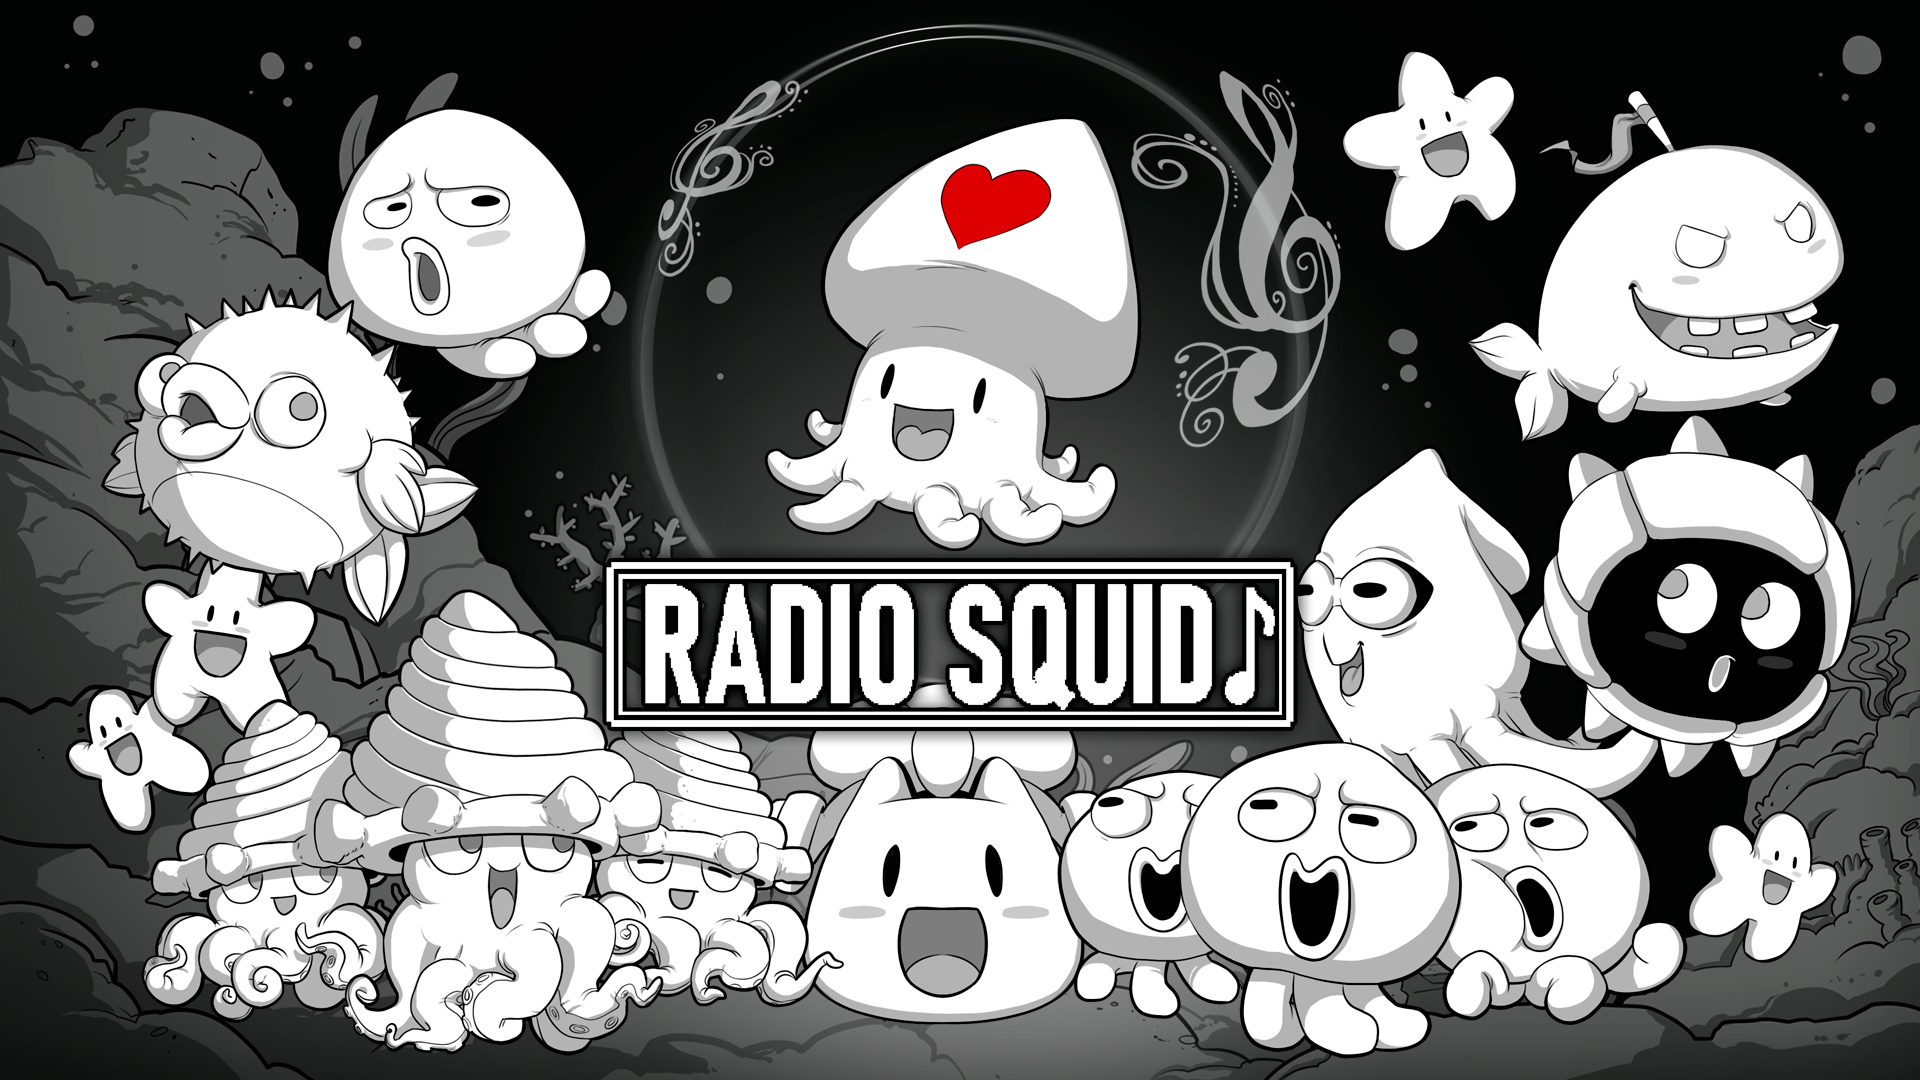 Radio Squid for Nintendo Switch   Nintendo Game Details